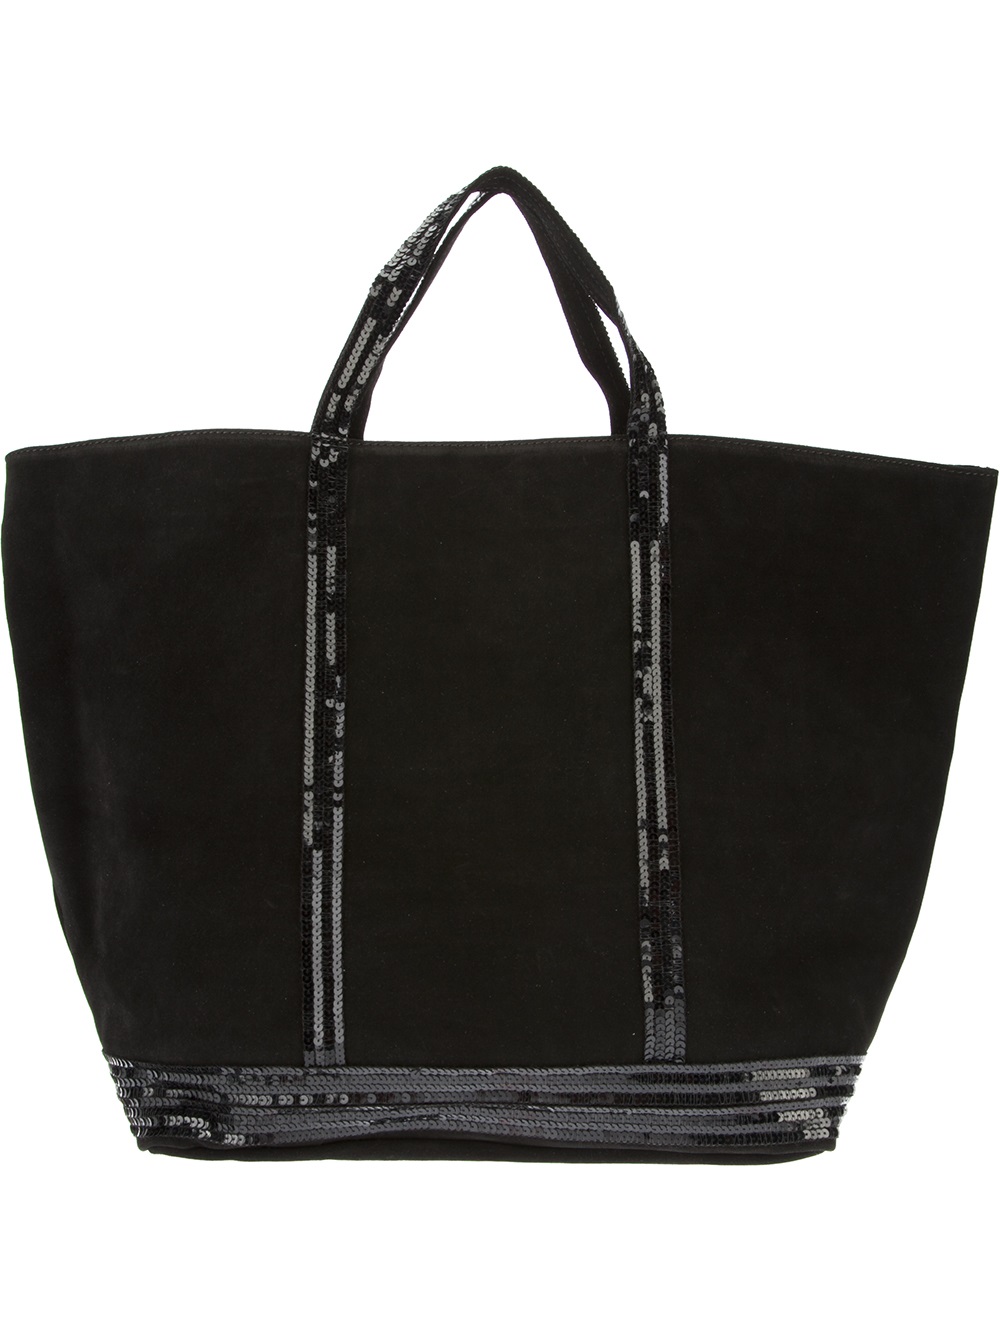 Vanessa bruno Sequin Detail Shopper Bag in Black | Lyst